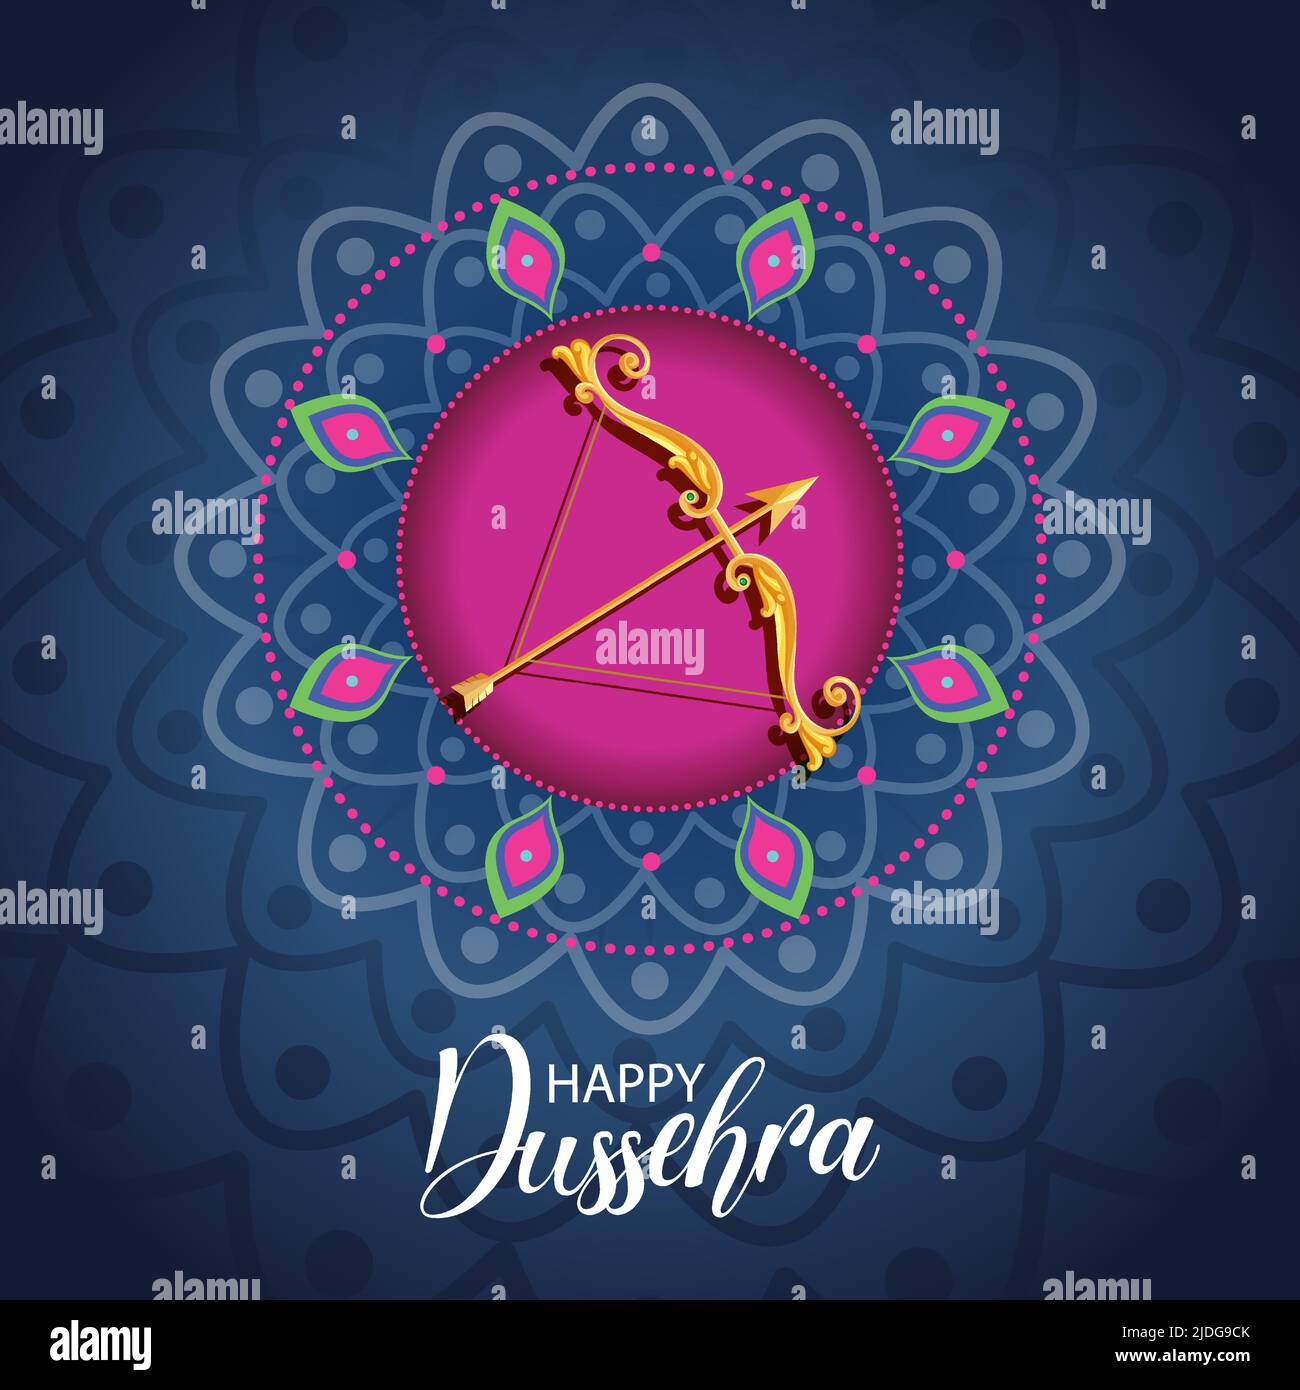 Happy Dussehra festival poster design illustration Stock Vector ...